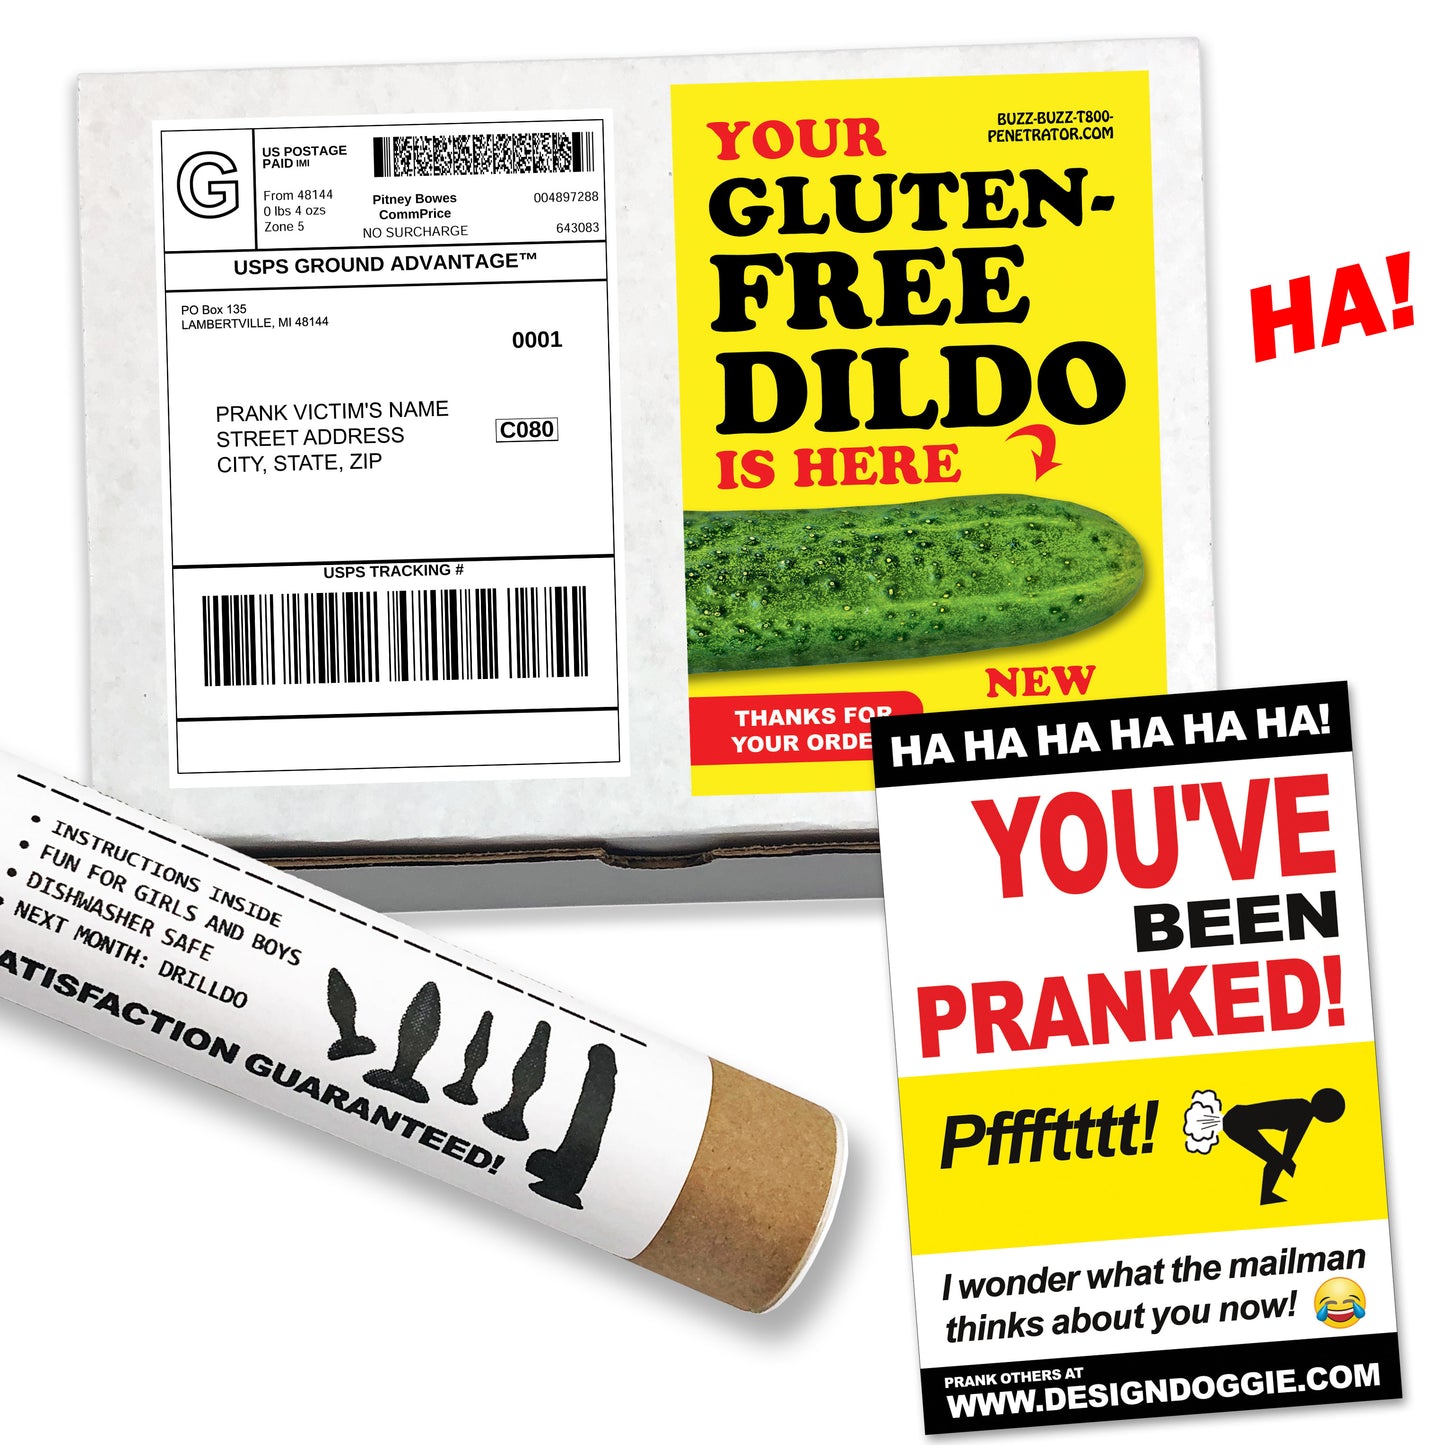 Gluten-Free Dildo Prank Mail